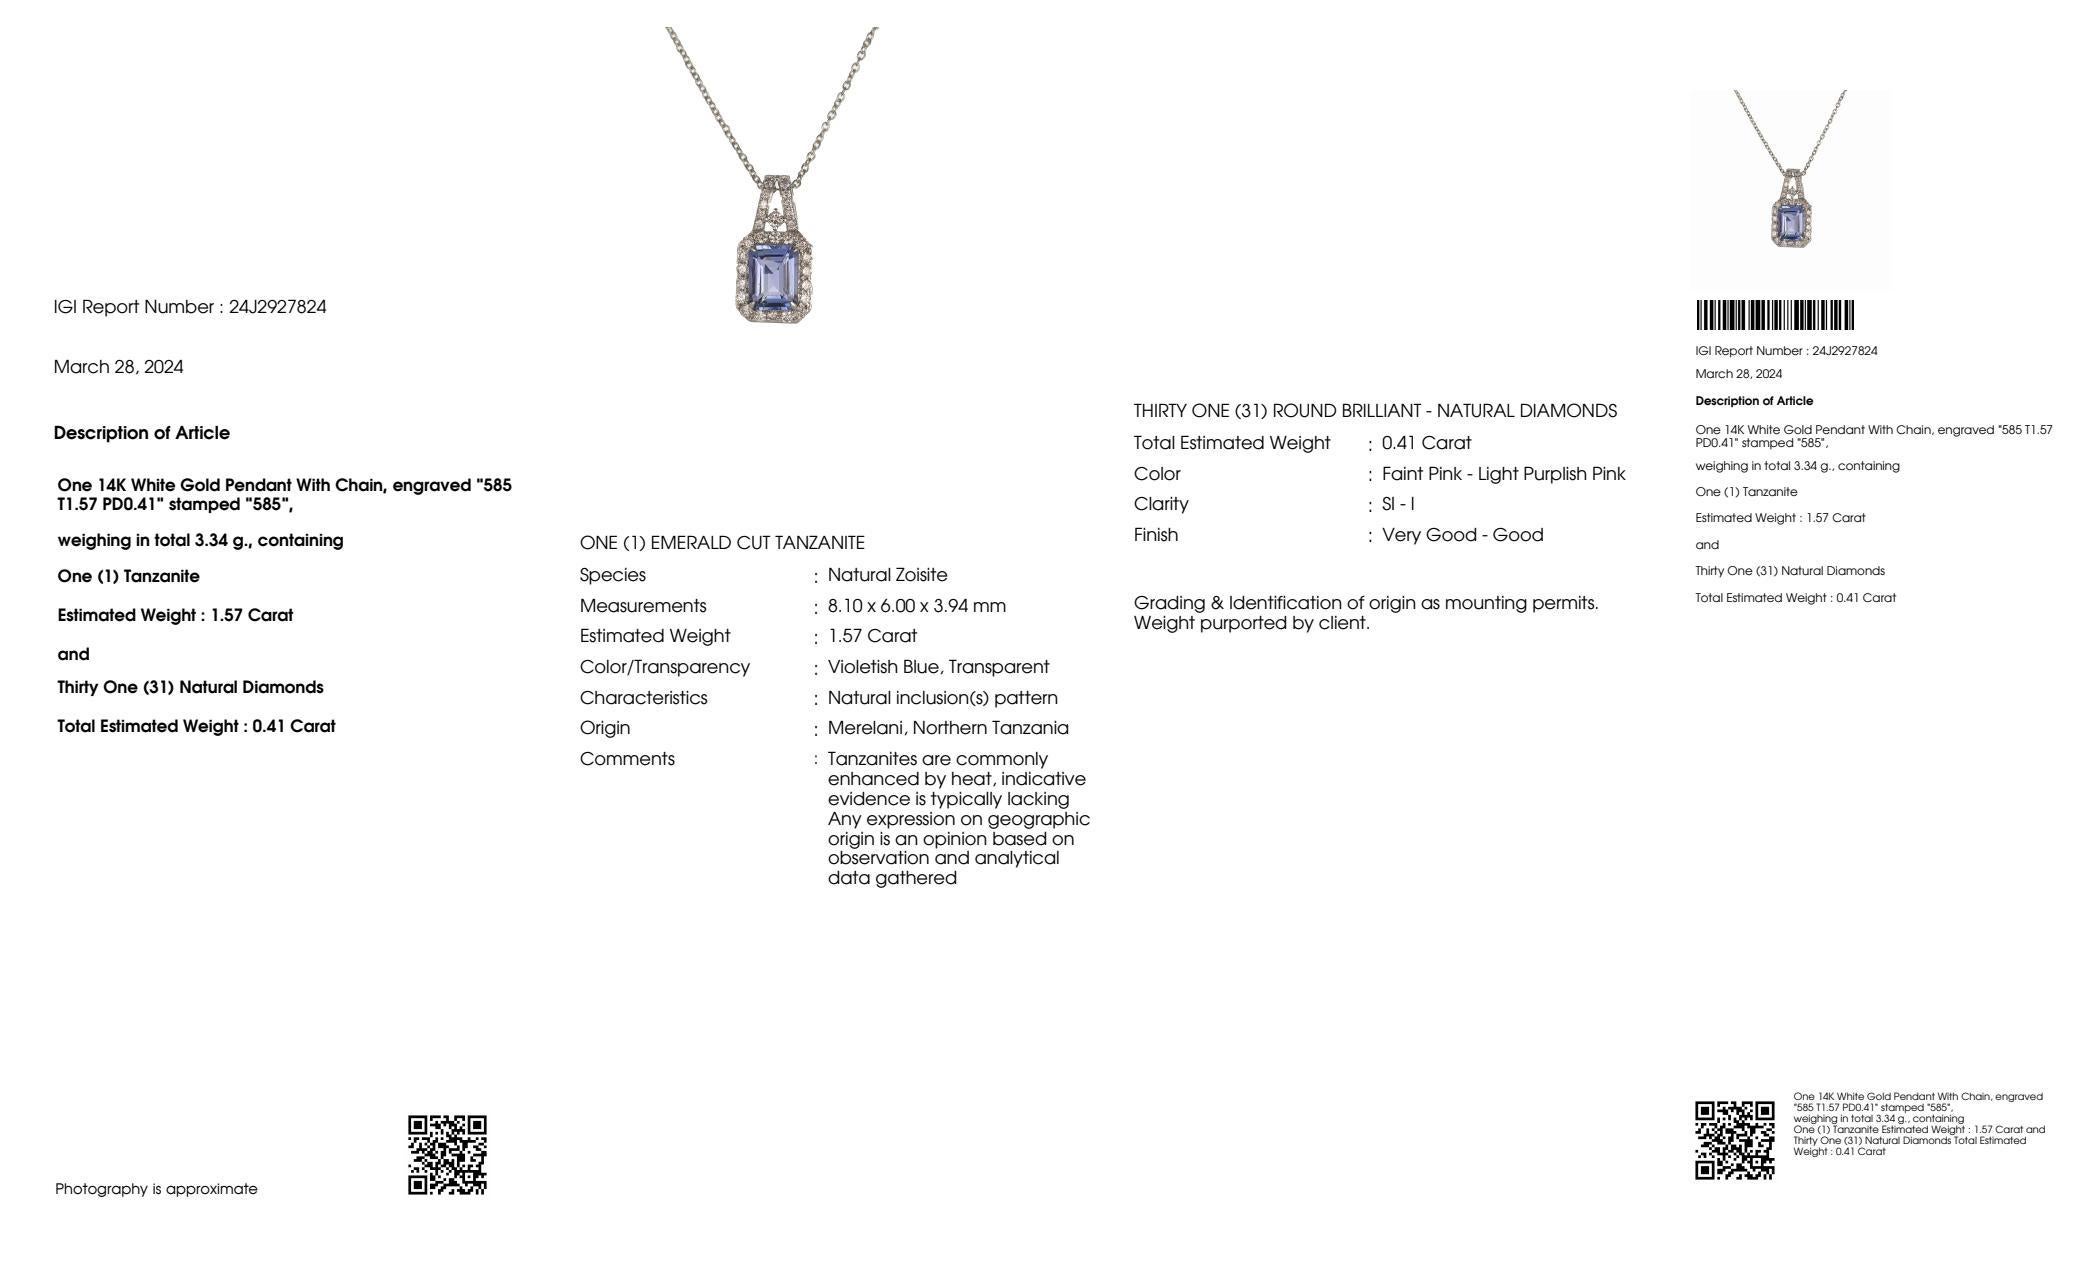 IGI 14K 1.57 ct Tanzanite&Pink Diamond Antique Pendant Necklace For Sale 2